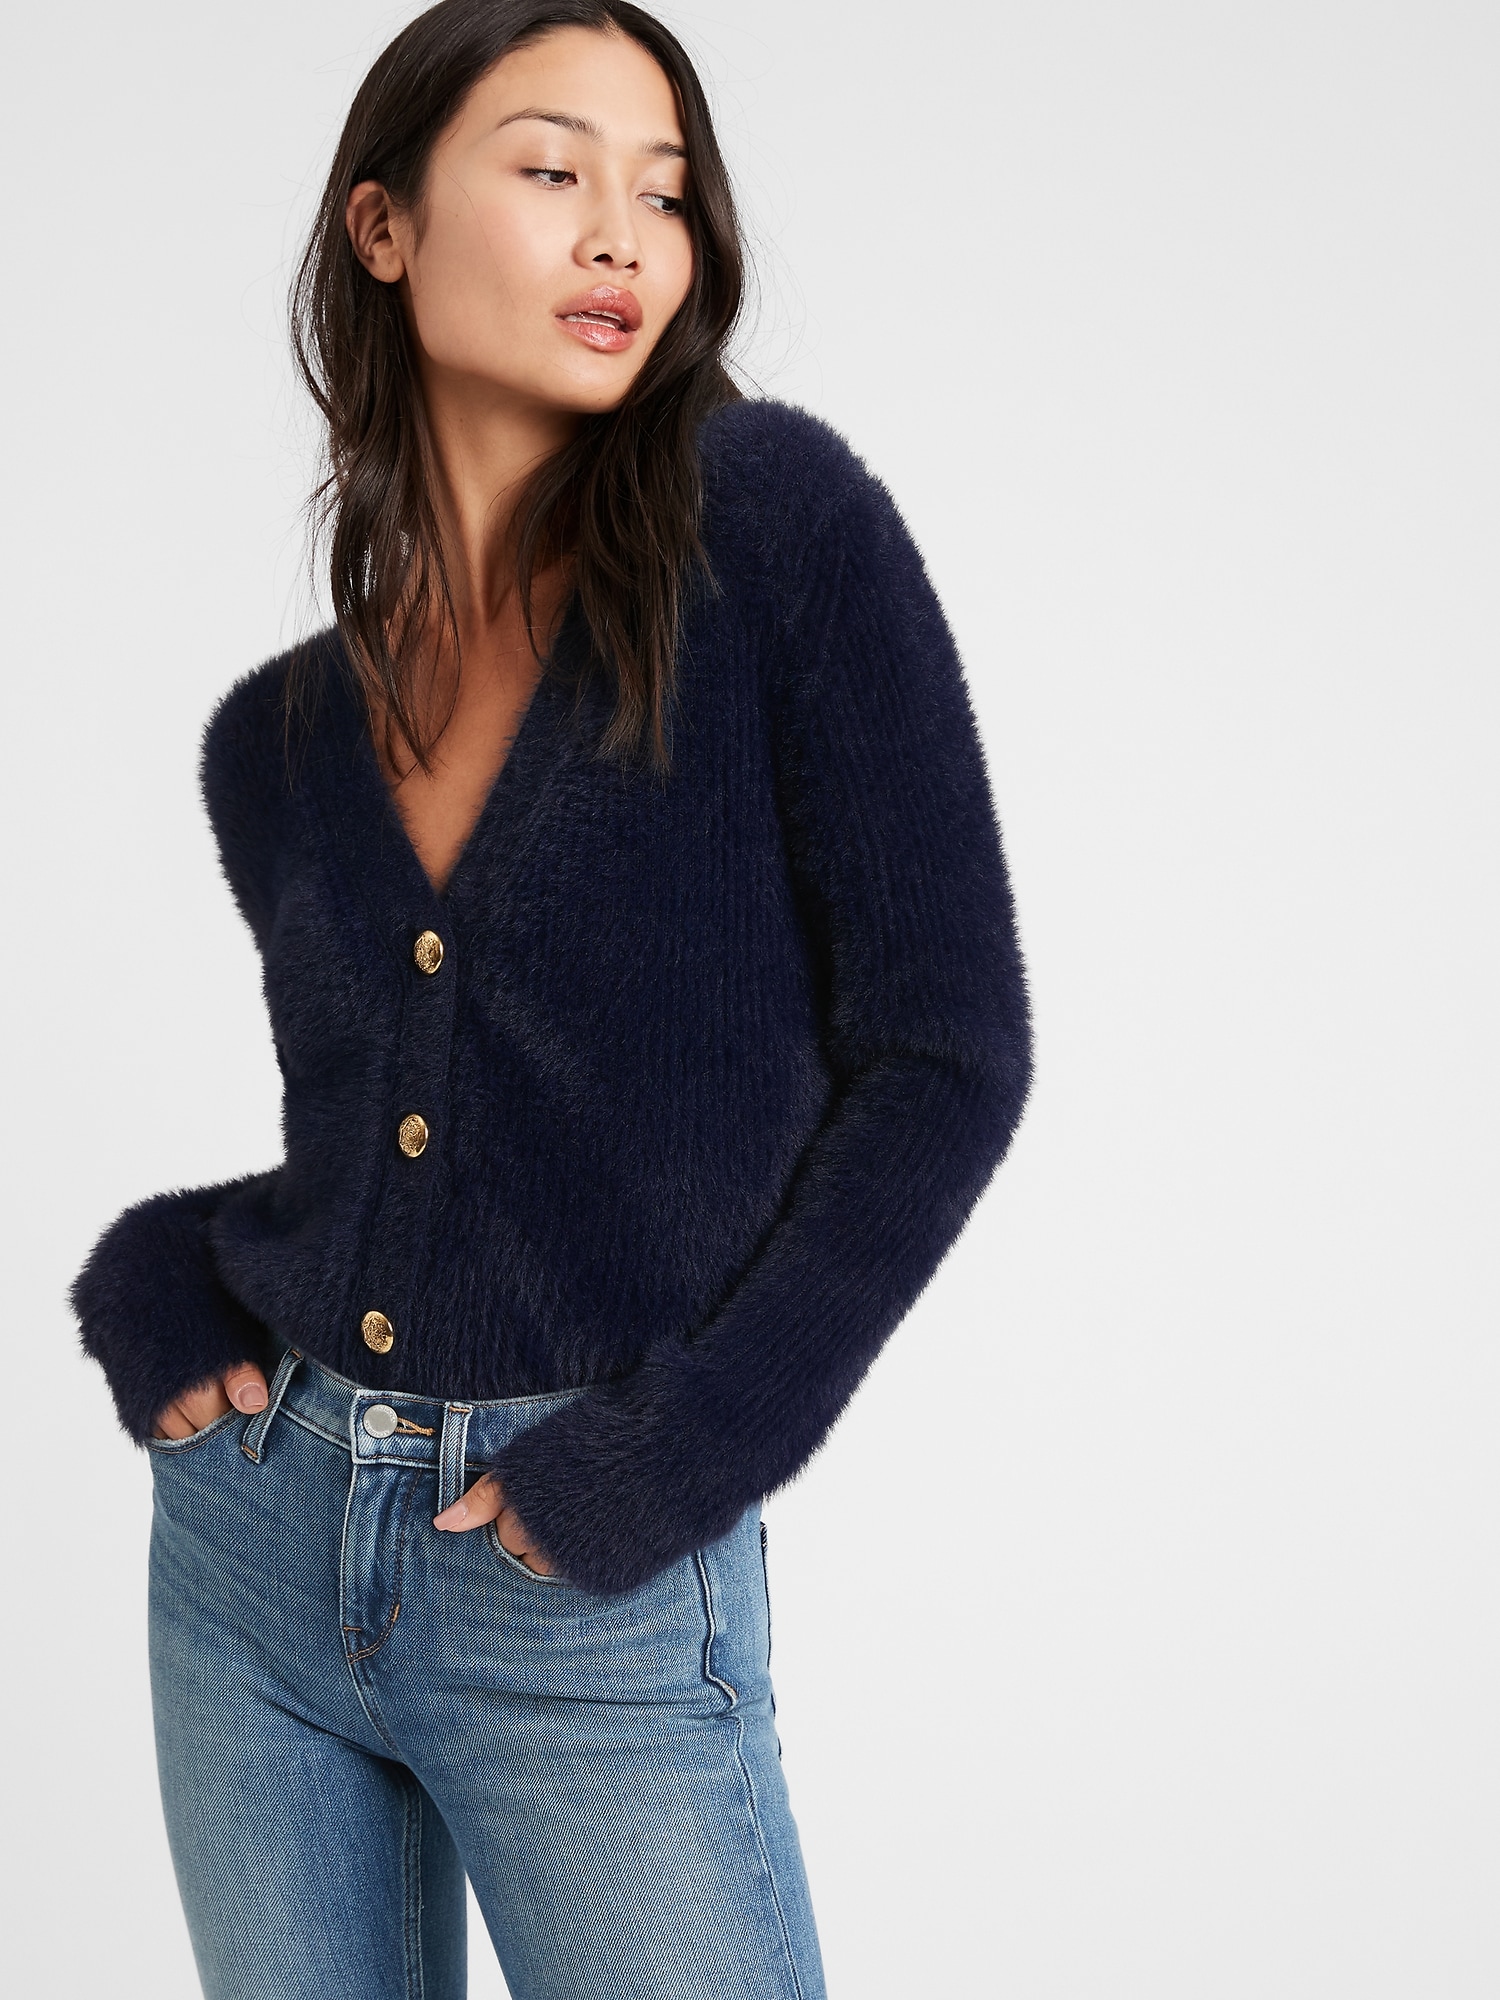 Fuzzy Cropped Cardigan Sweater